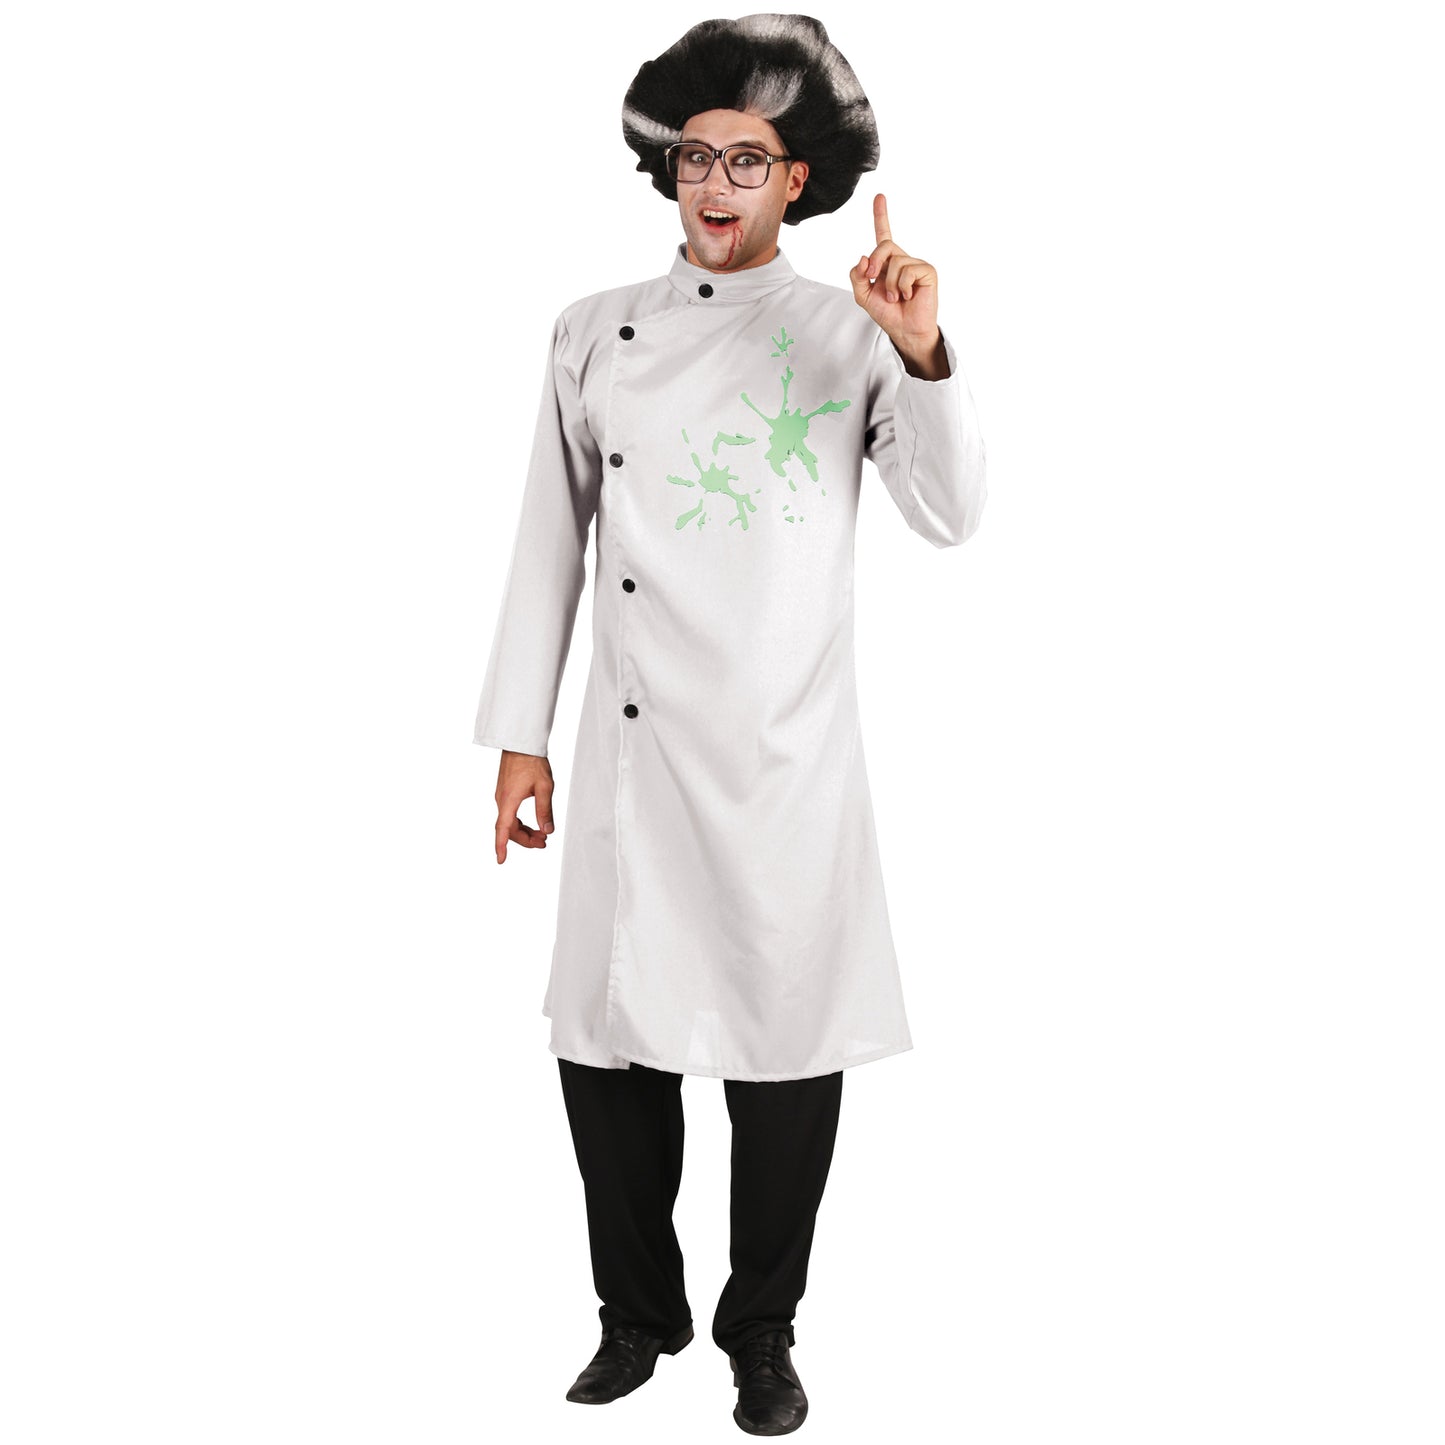 Crazy Professor Lab Coat